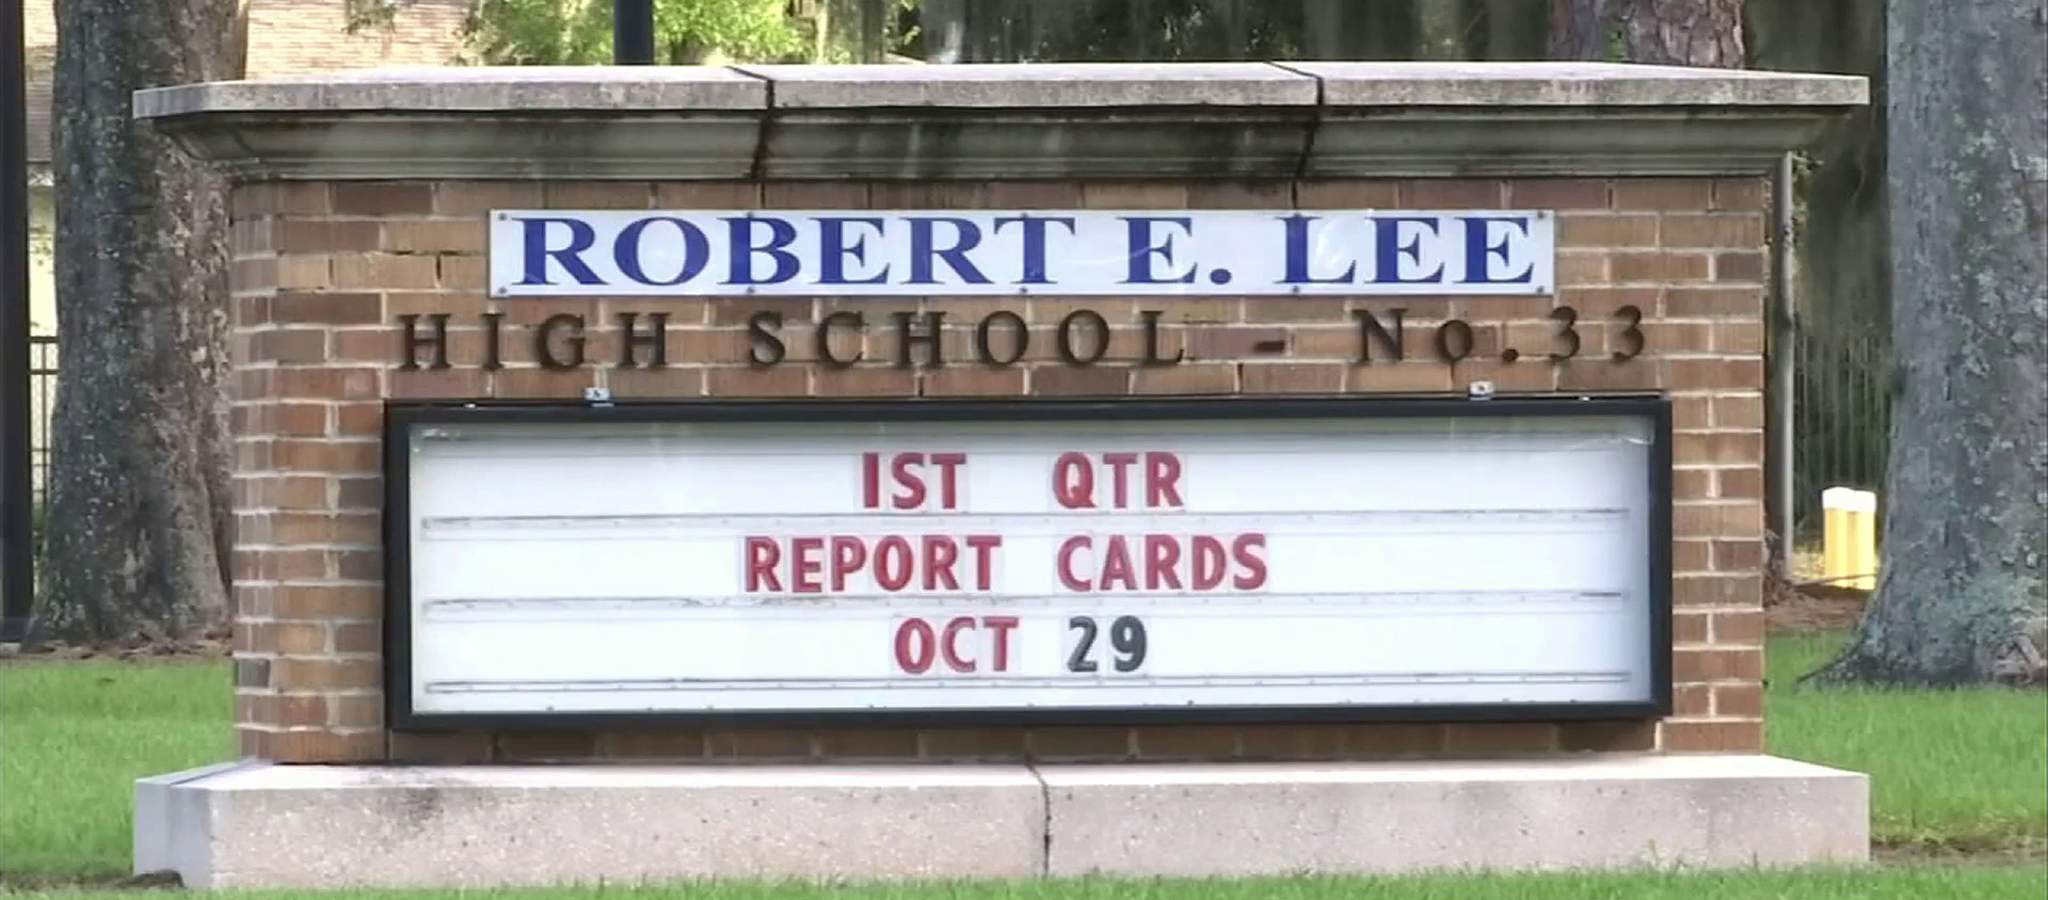 Video clip from Lee High School renaming meeting goes viral